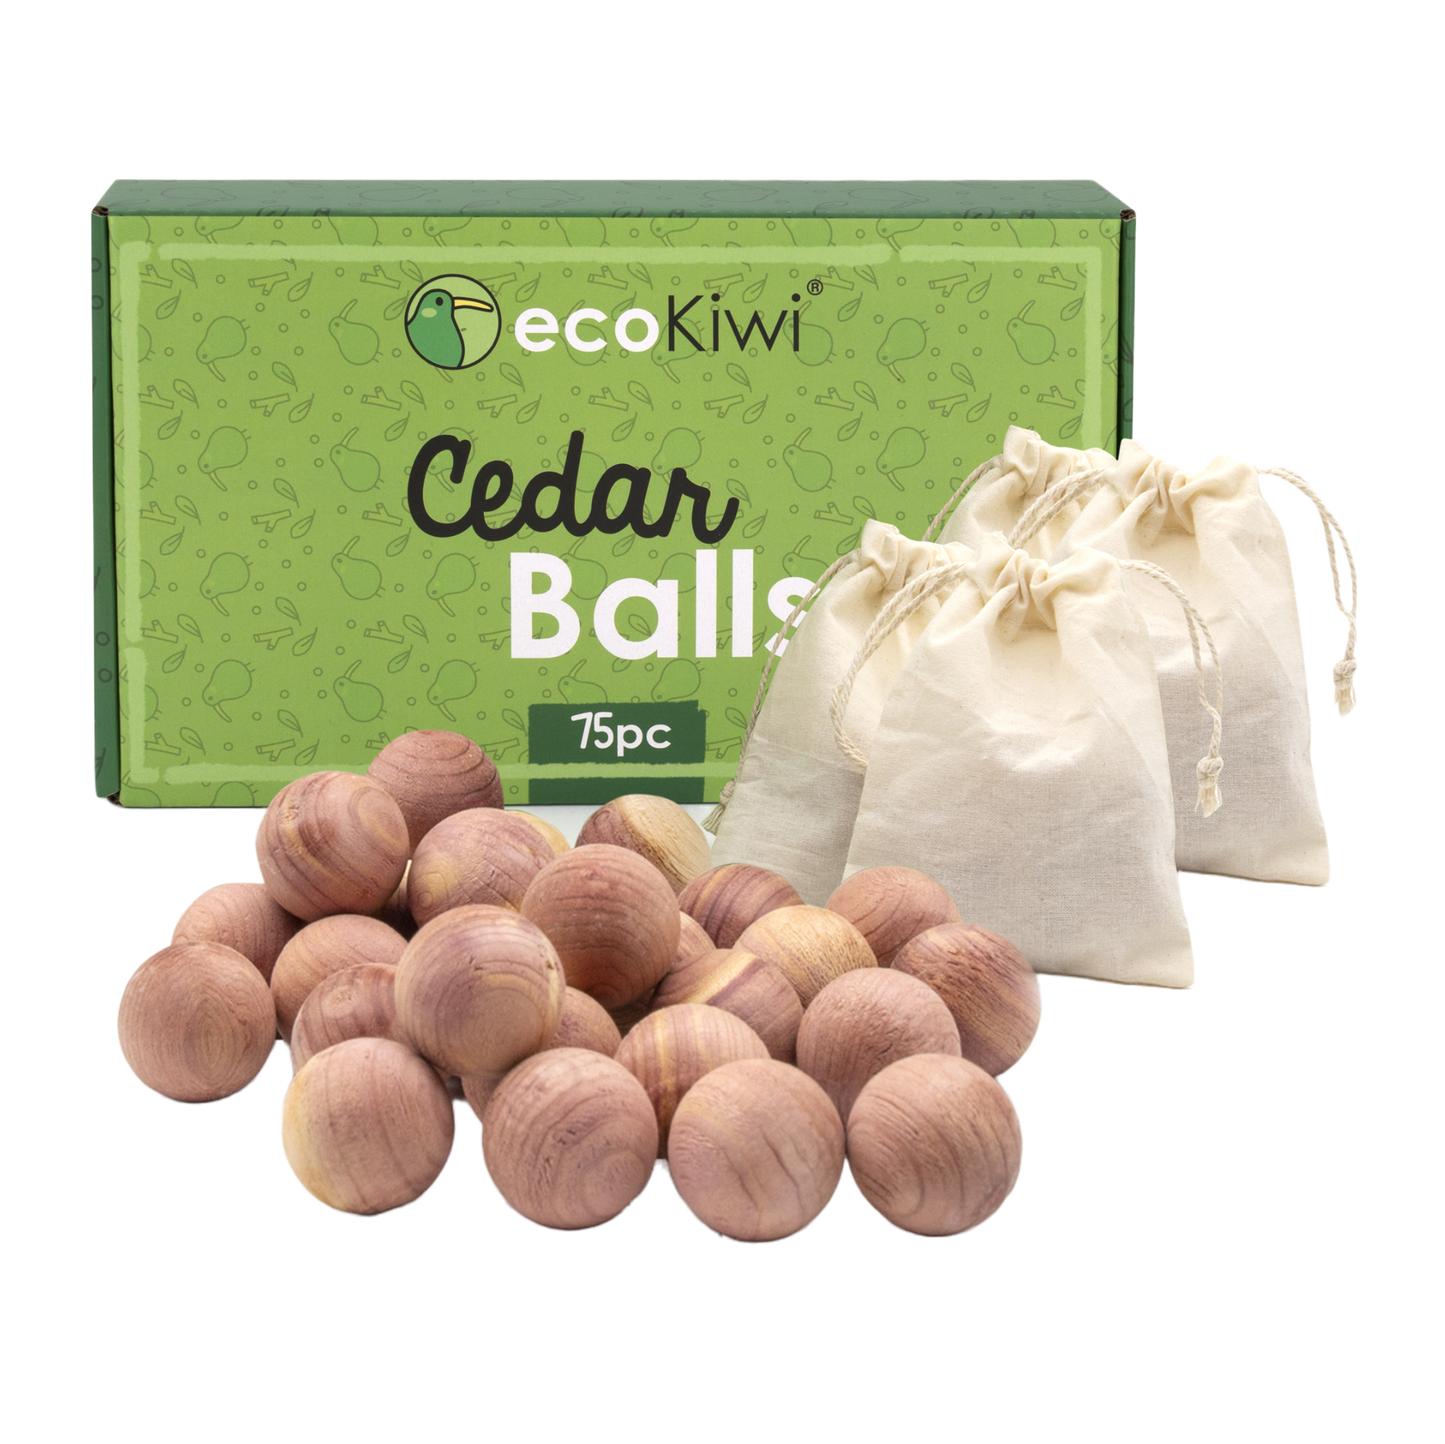 Cedar Balls